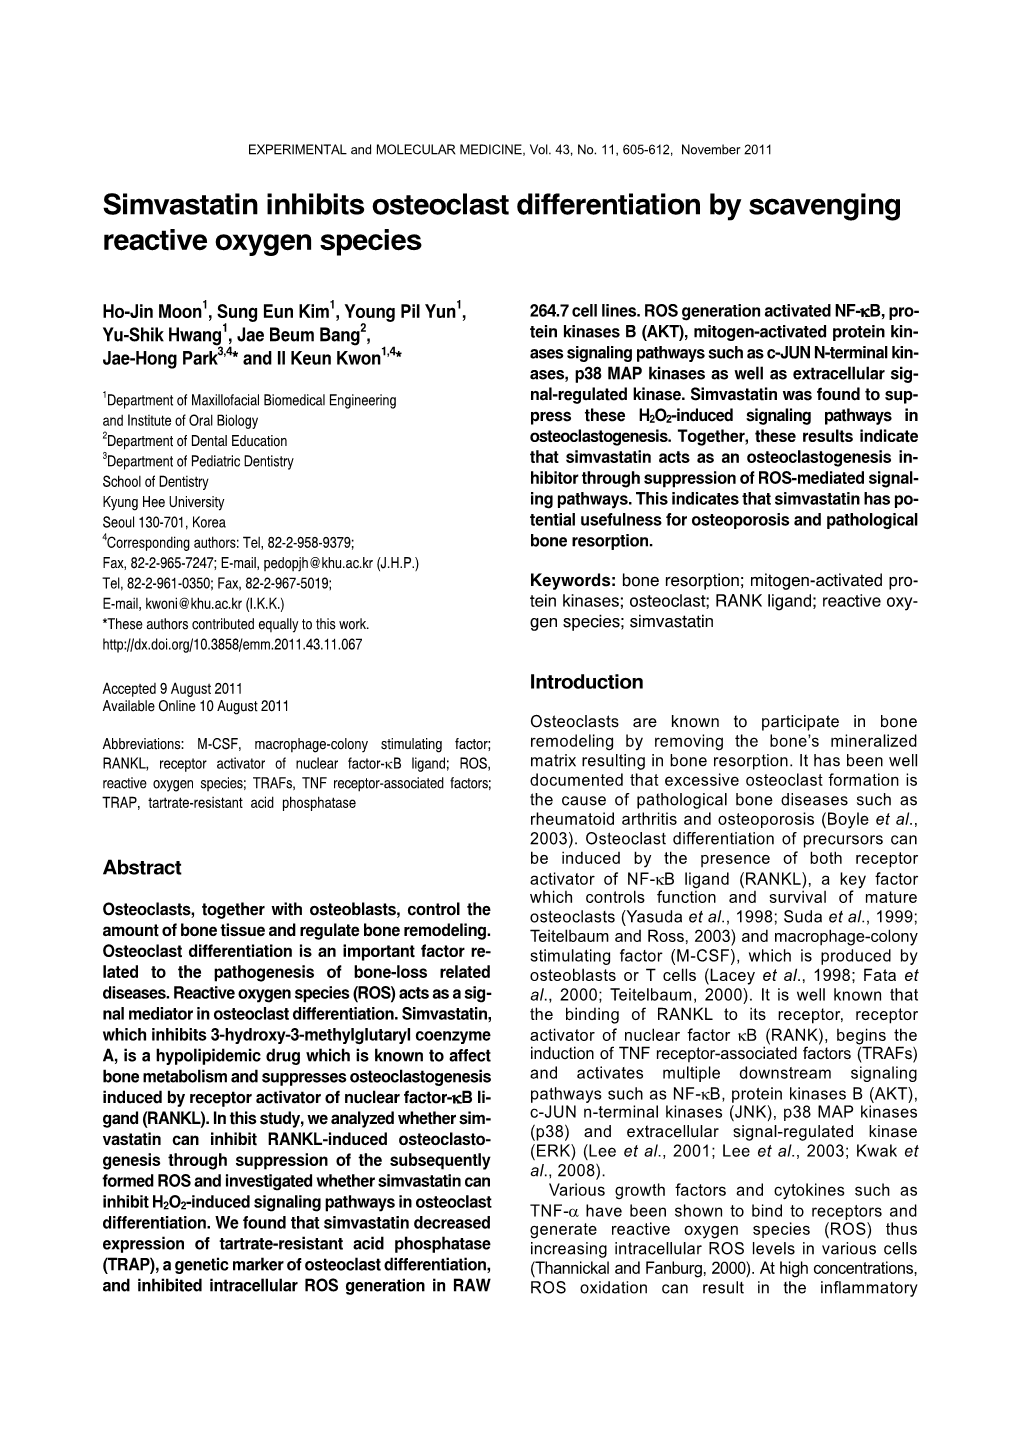 Simvastatin Inhibits Osteoclast Differentiation by Scavenging Reactive Oxygen Species